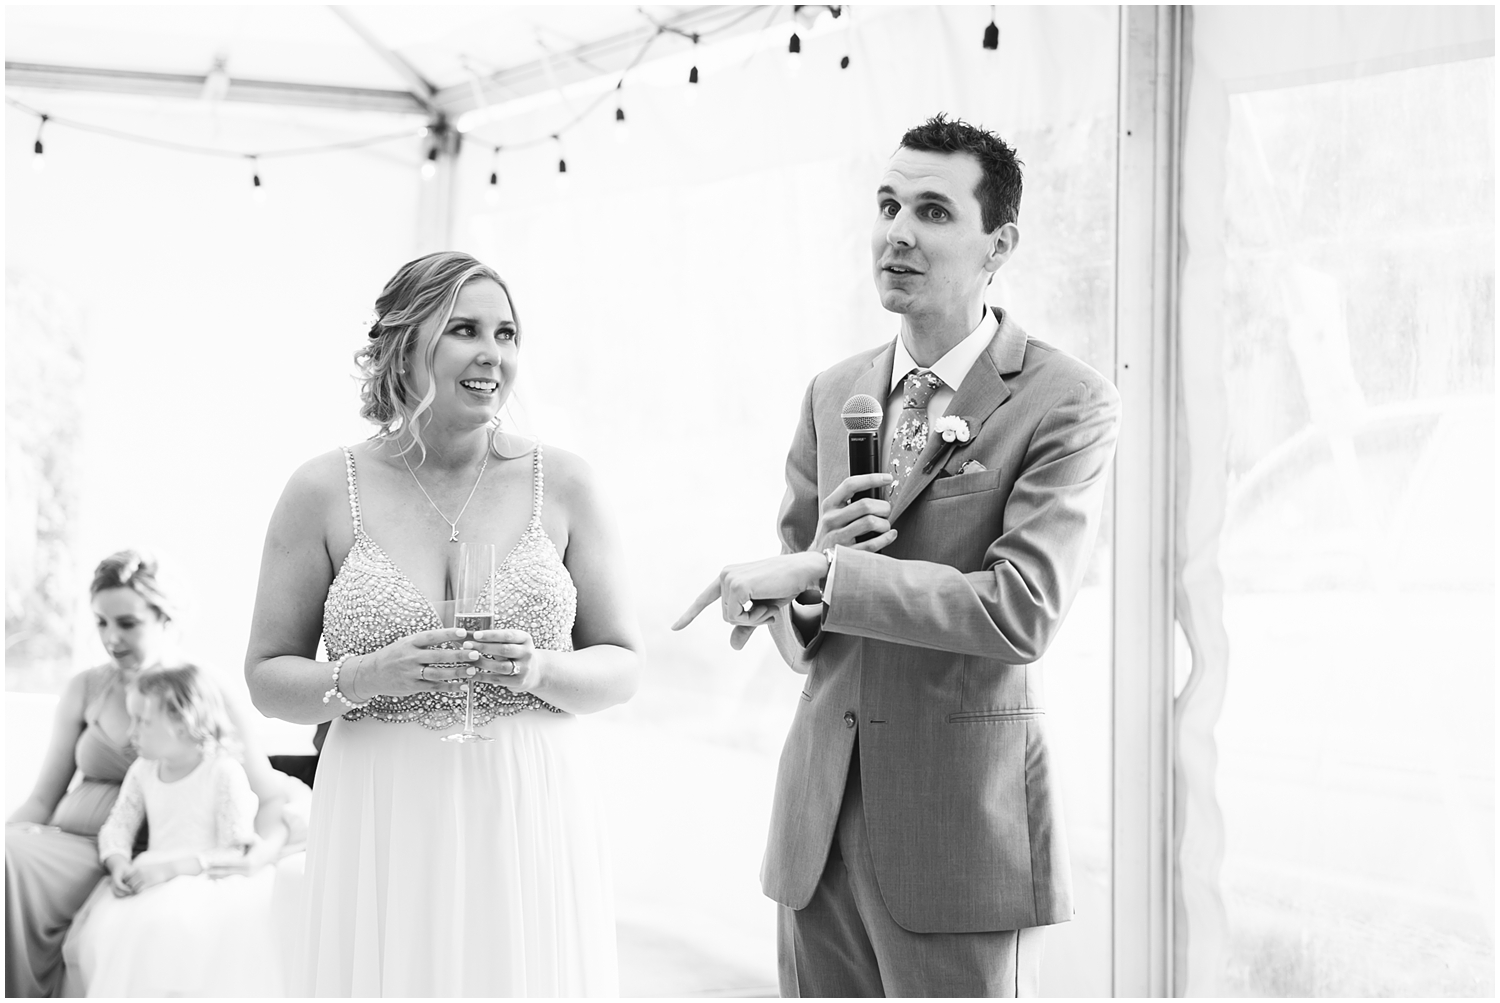 Seabrook Washington Wedding | Ryan & Sarah